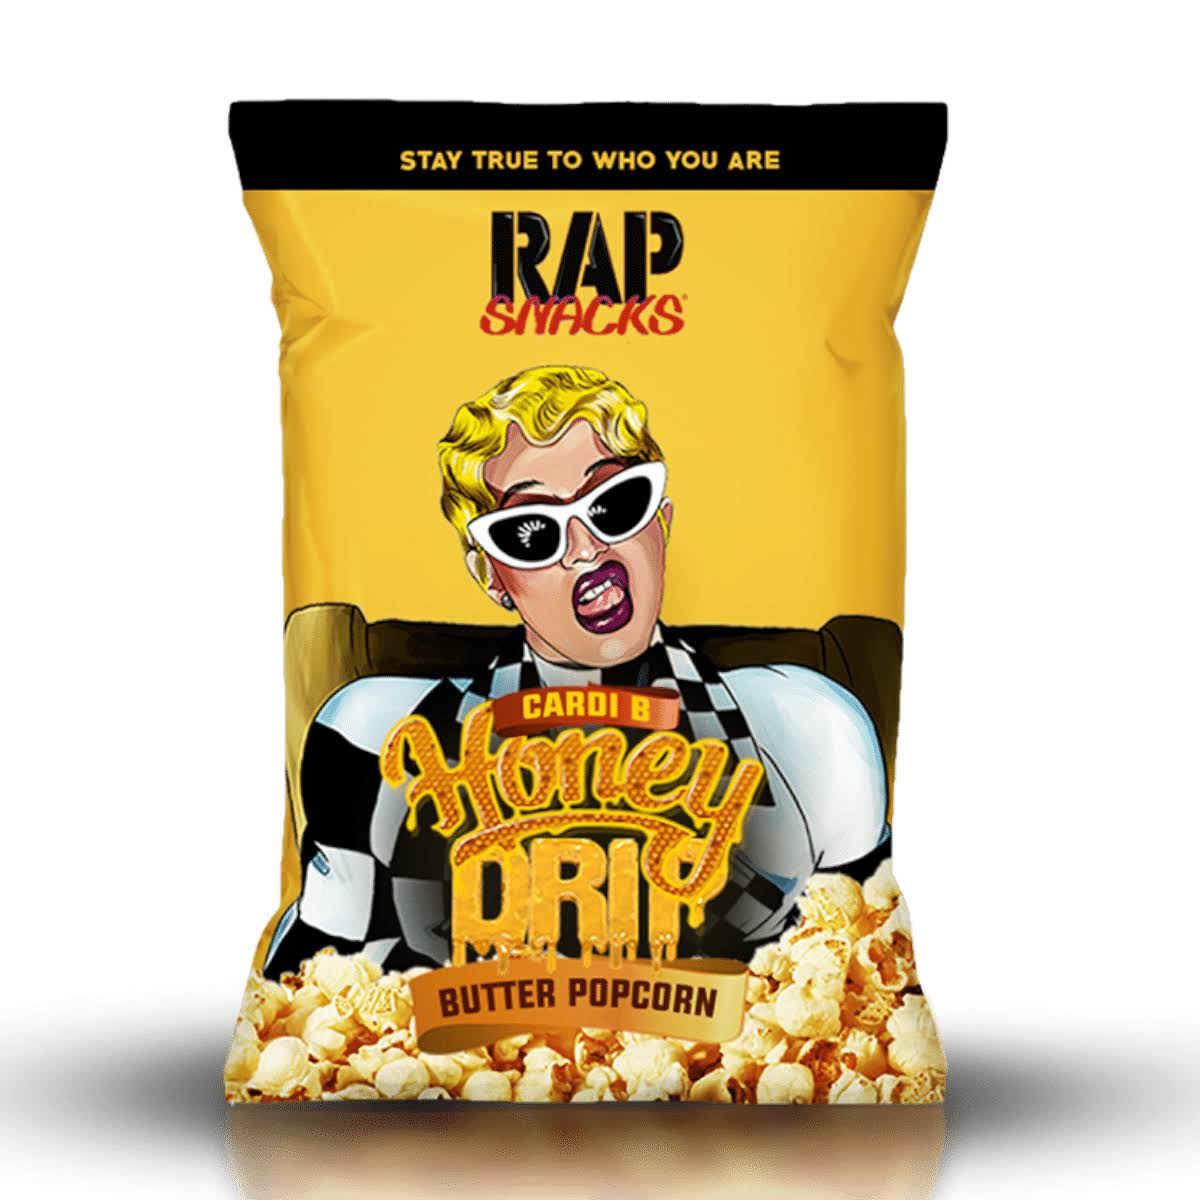 Rap Snacks Cardi B Honey Drip Butter Popcorn 2.75oz